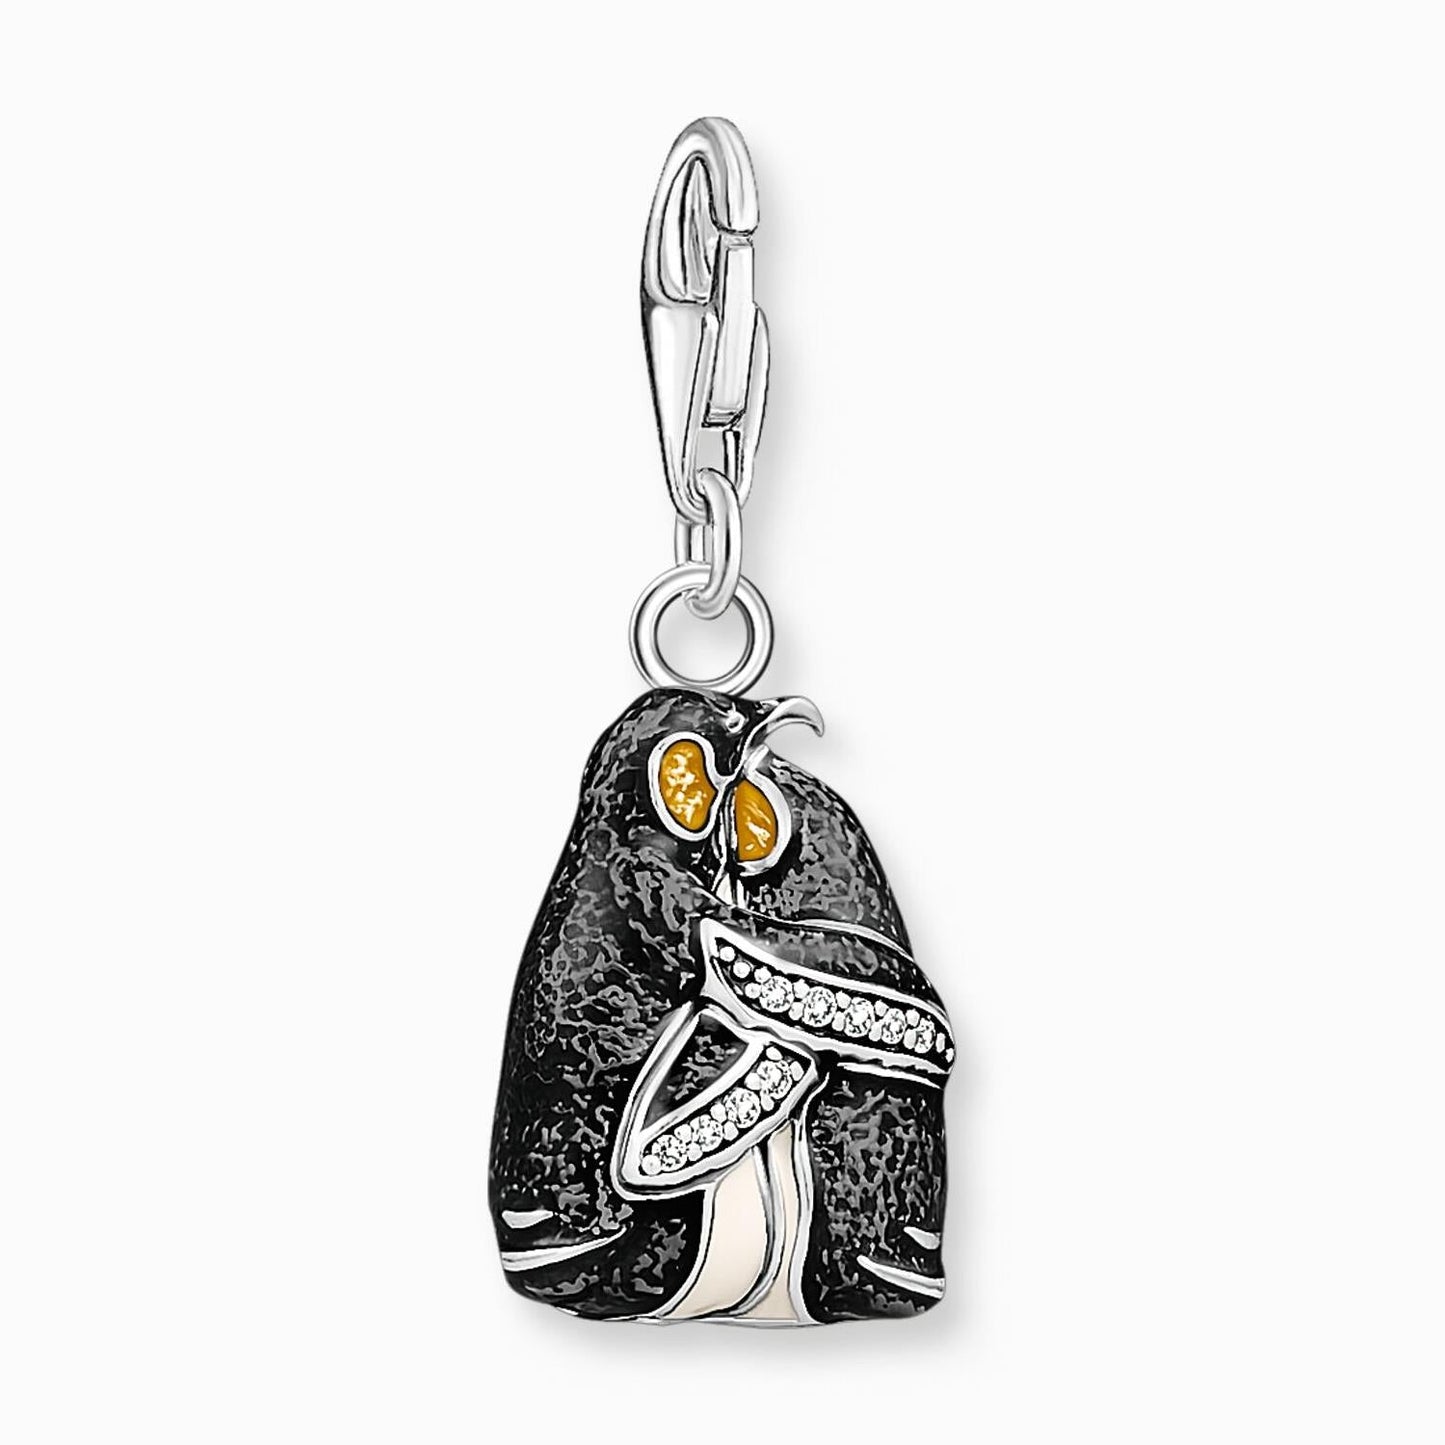 Thomas Sabo Silver Penguins Charm 1909-691-7